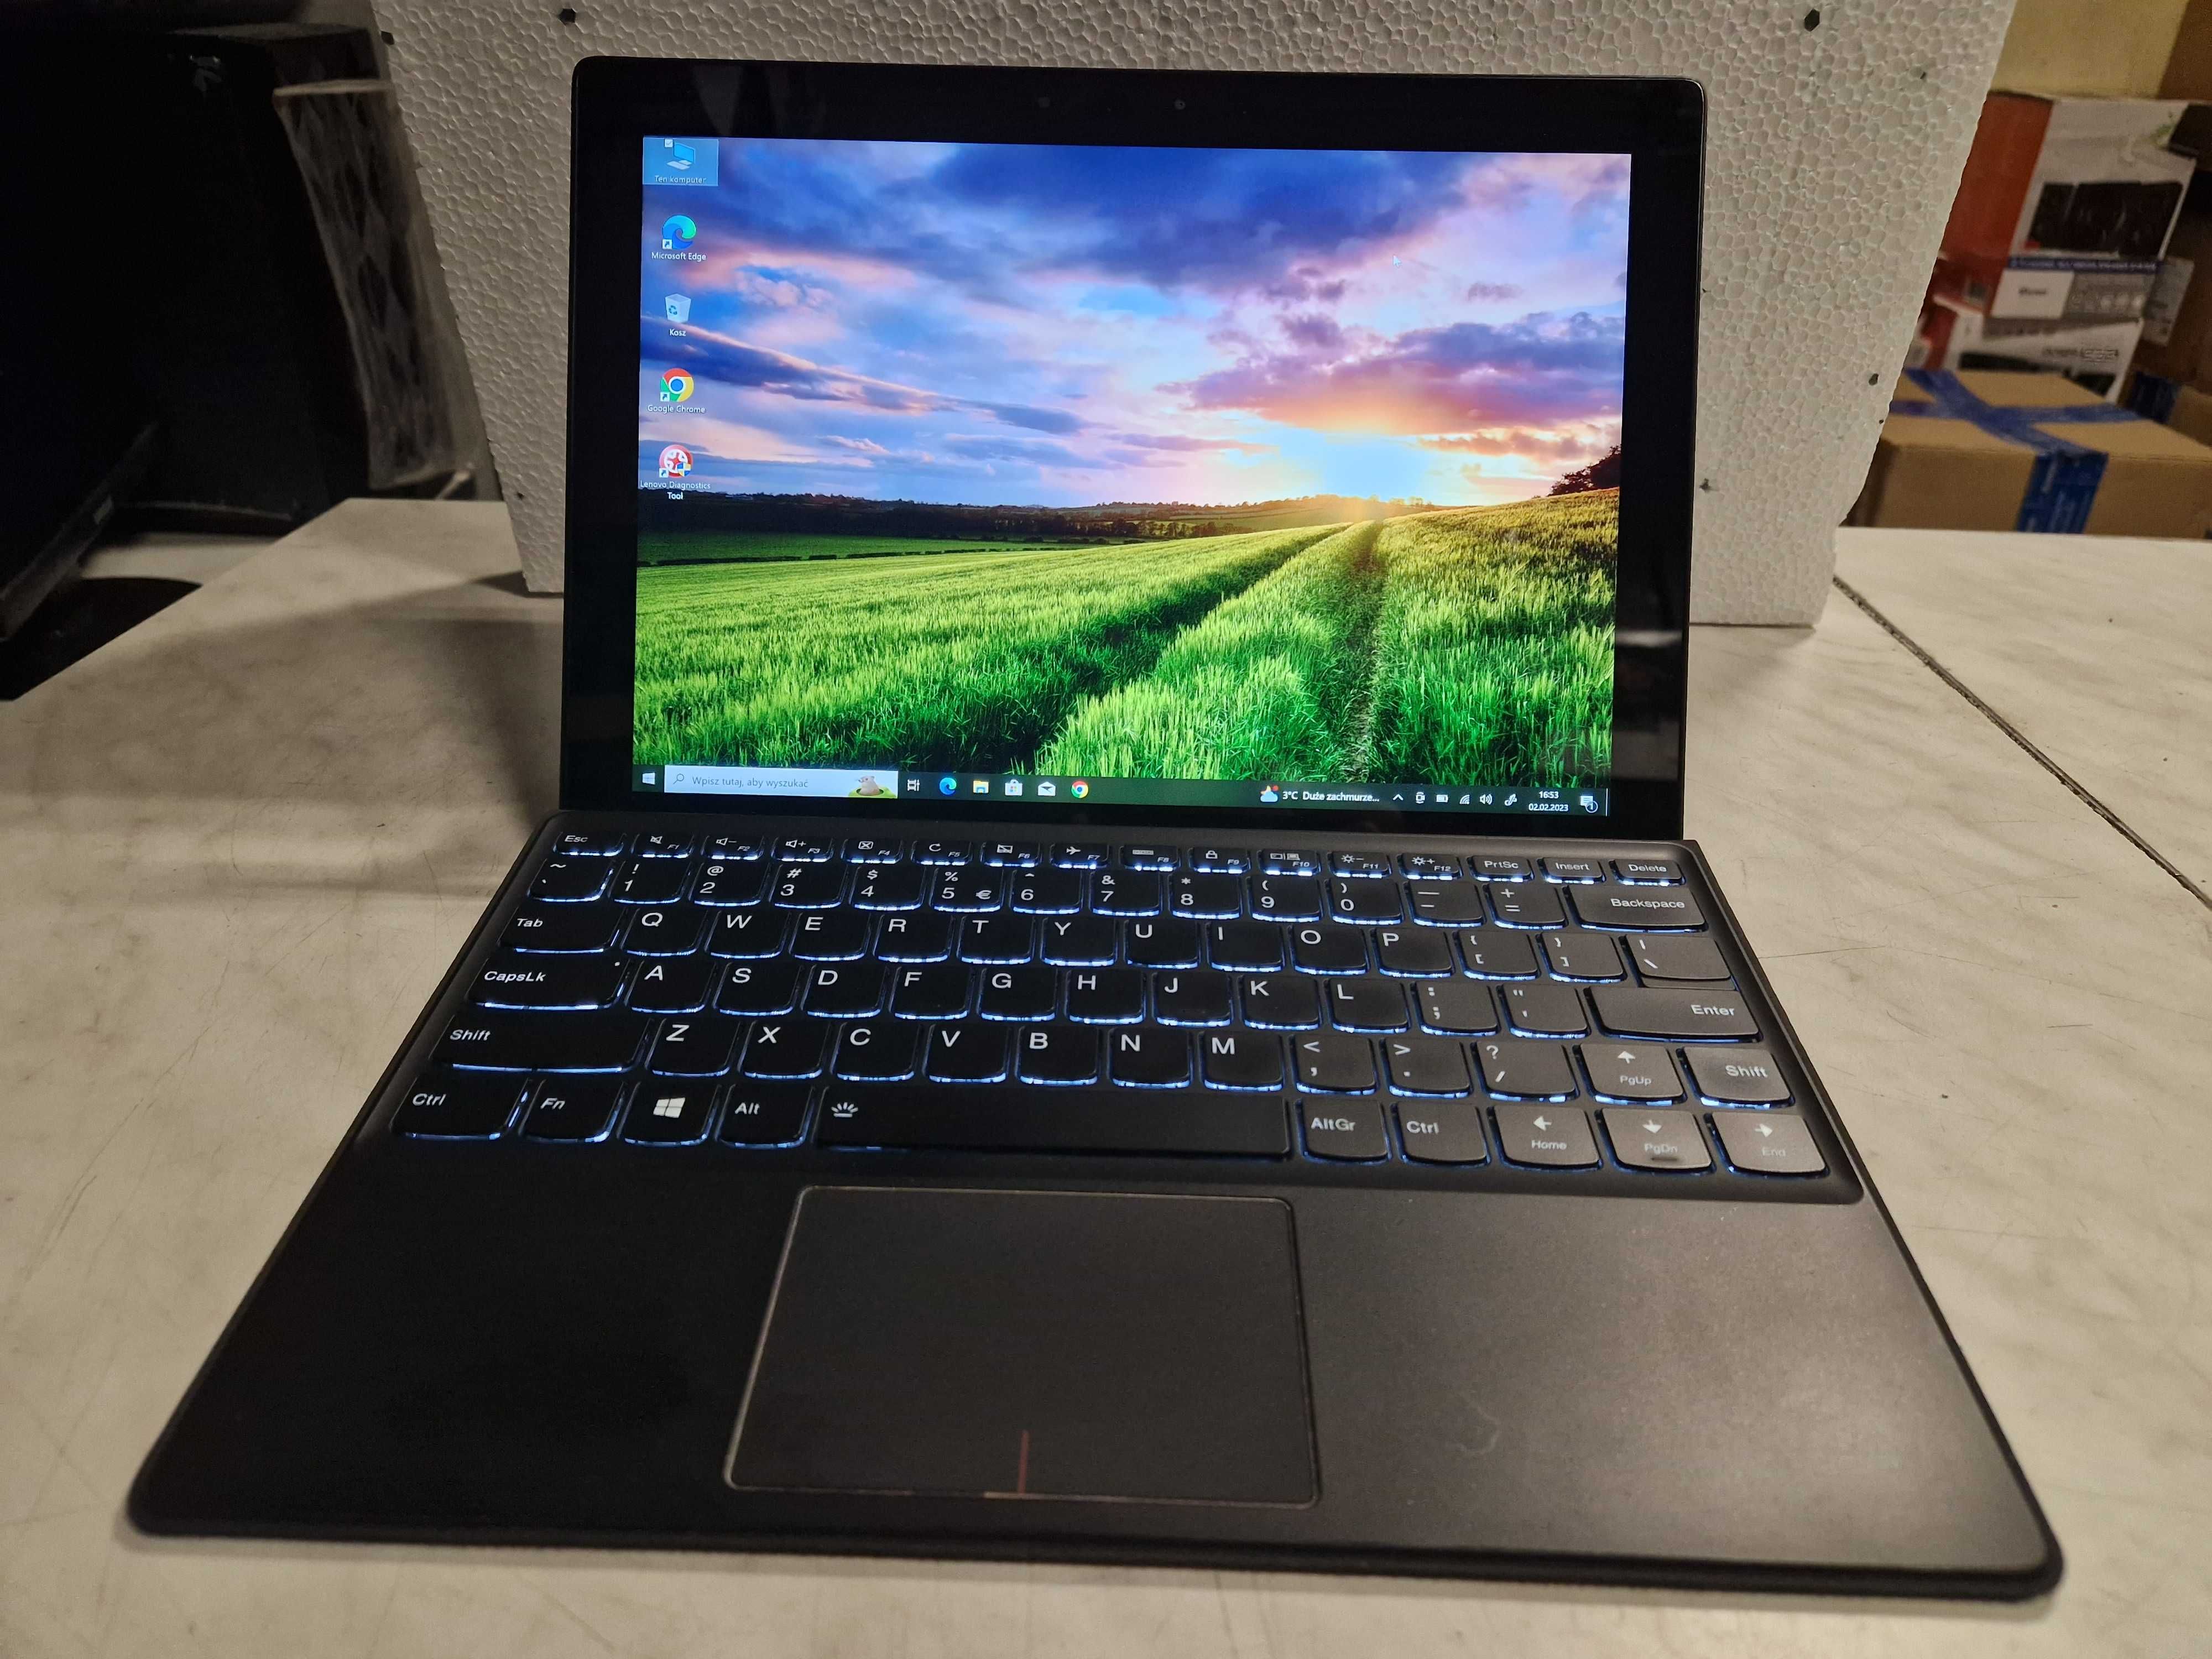 Ekskluzywny Lenovo MIIX-720 Laptop - Tablet I5 8GB SSD256GB 12'' W10